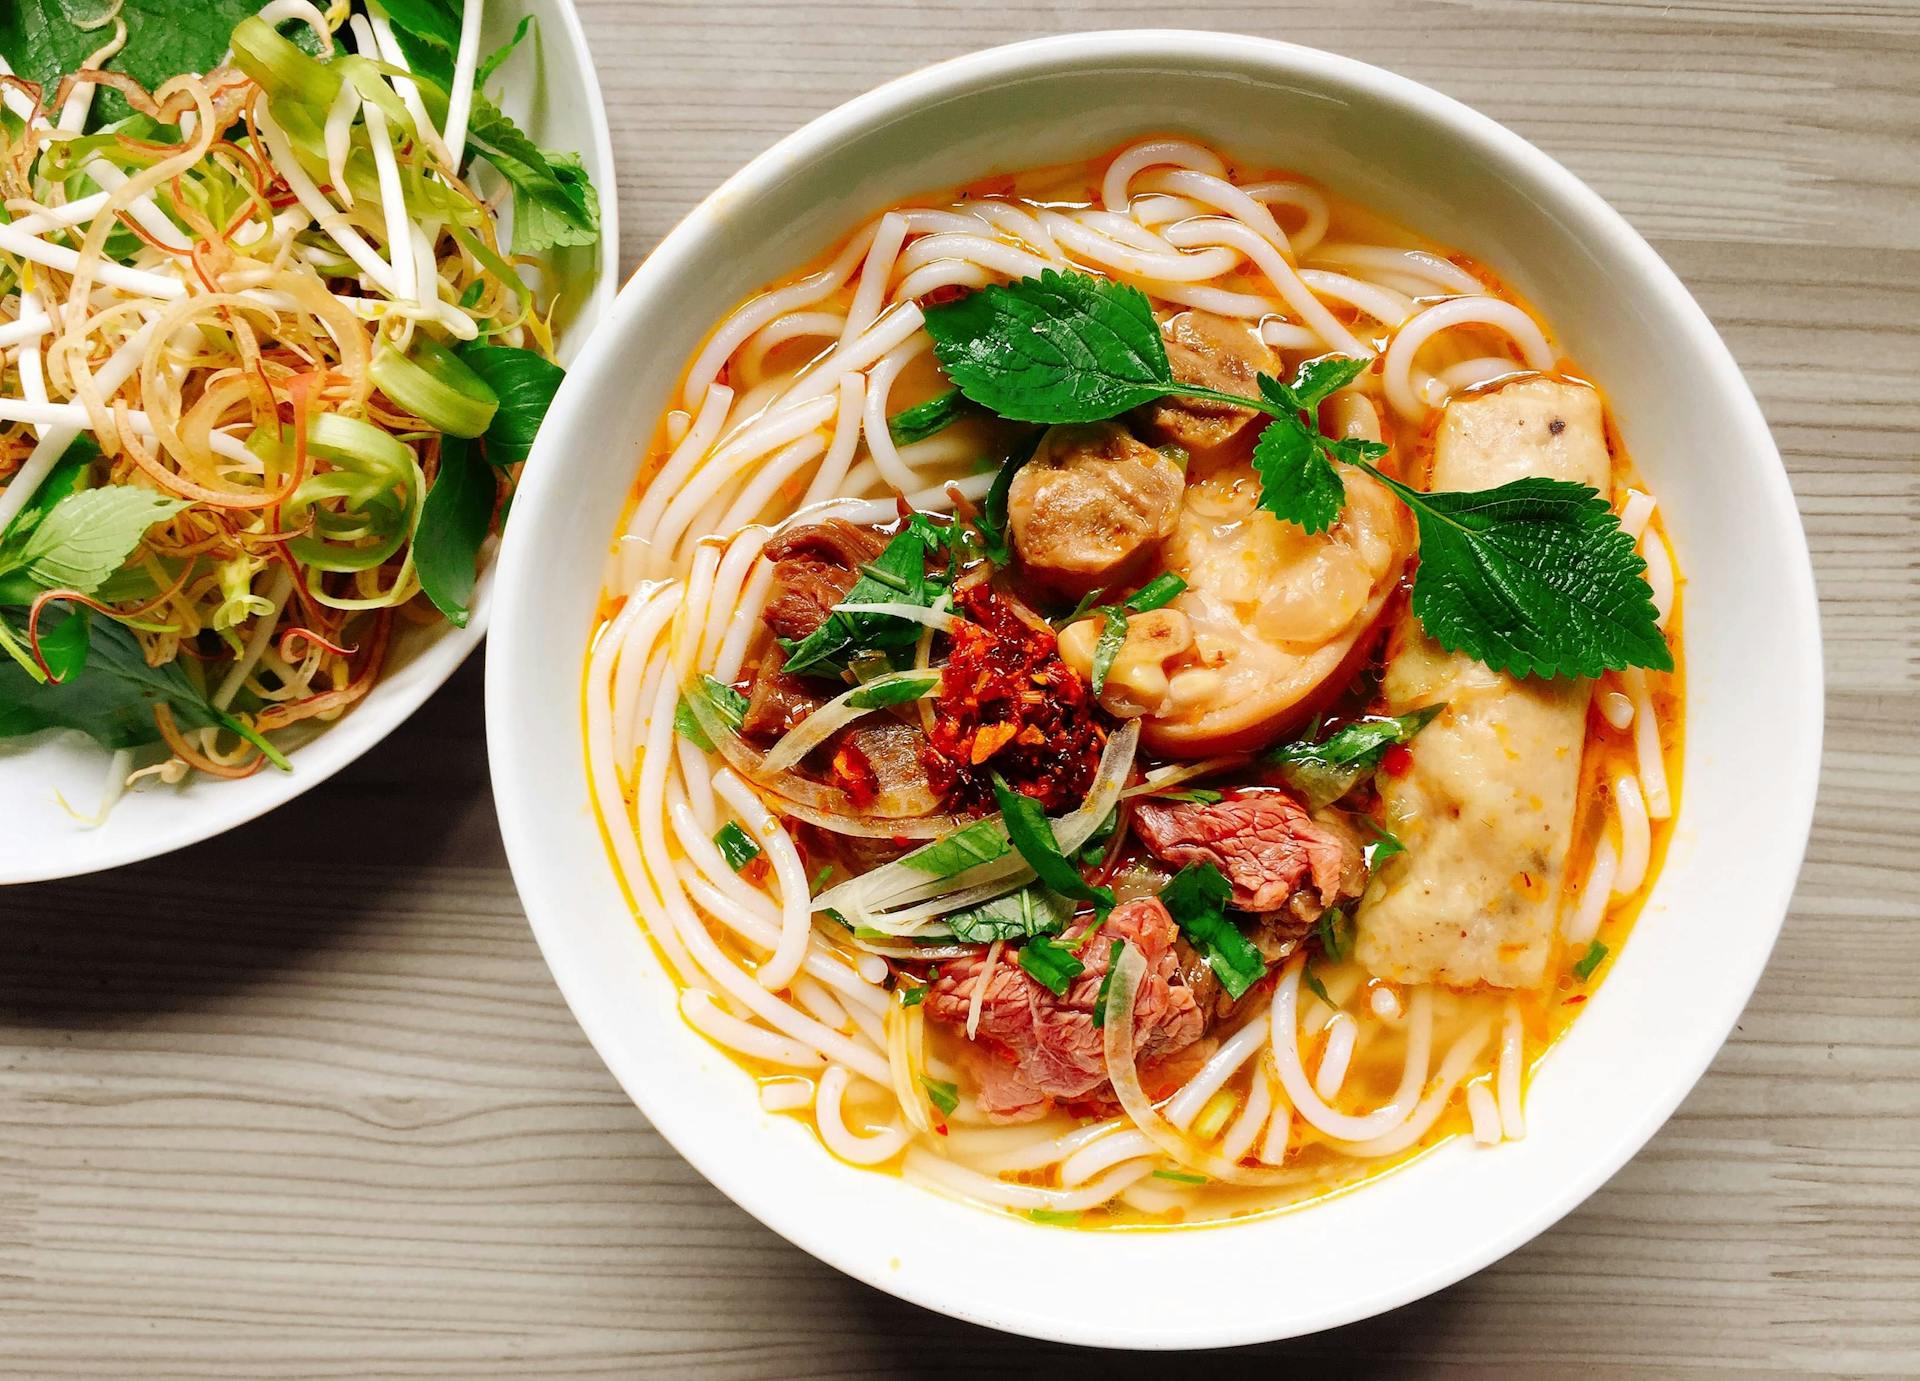 Two bowls of noodles | Source: Pexels